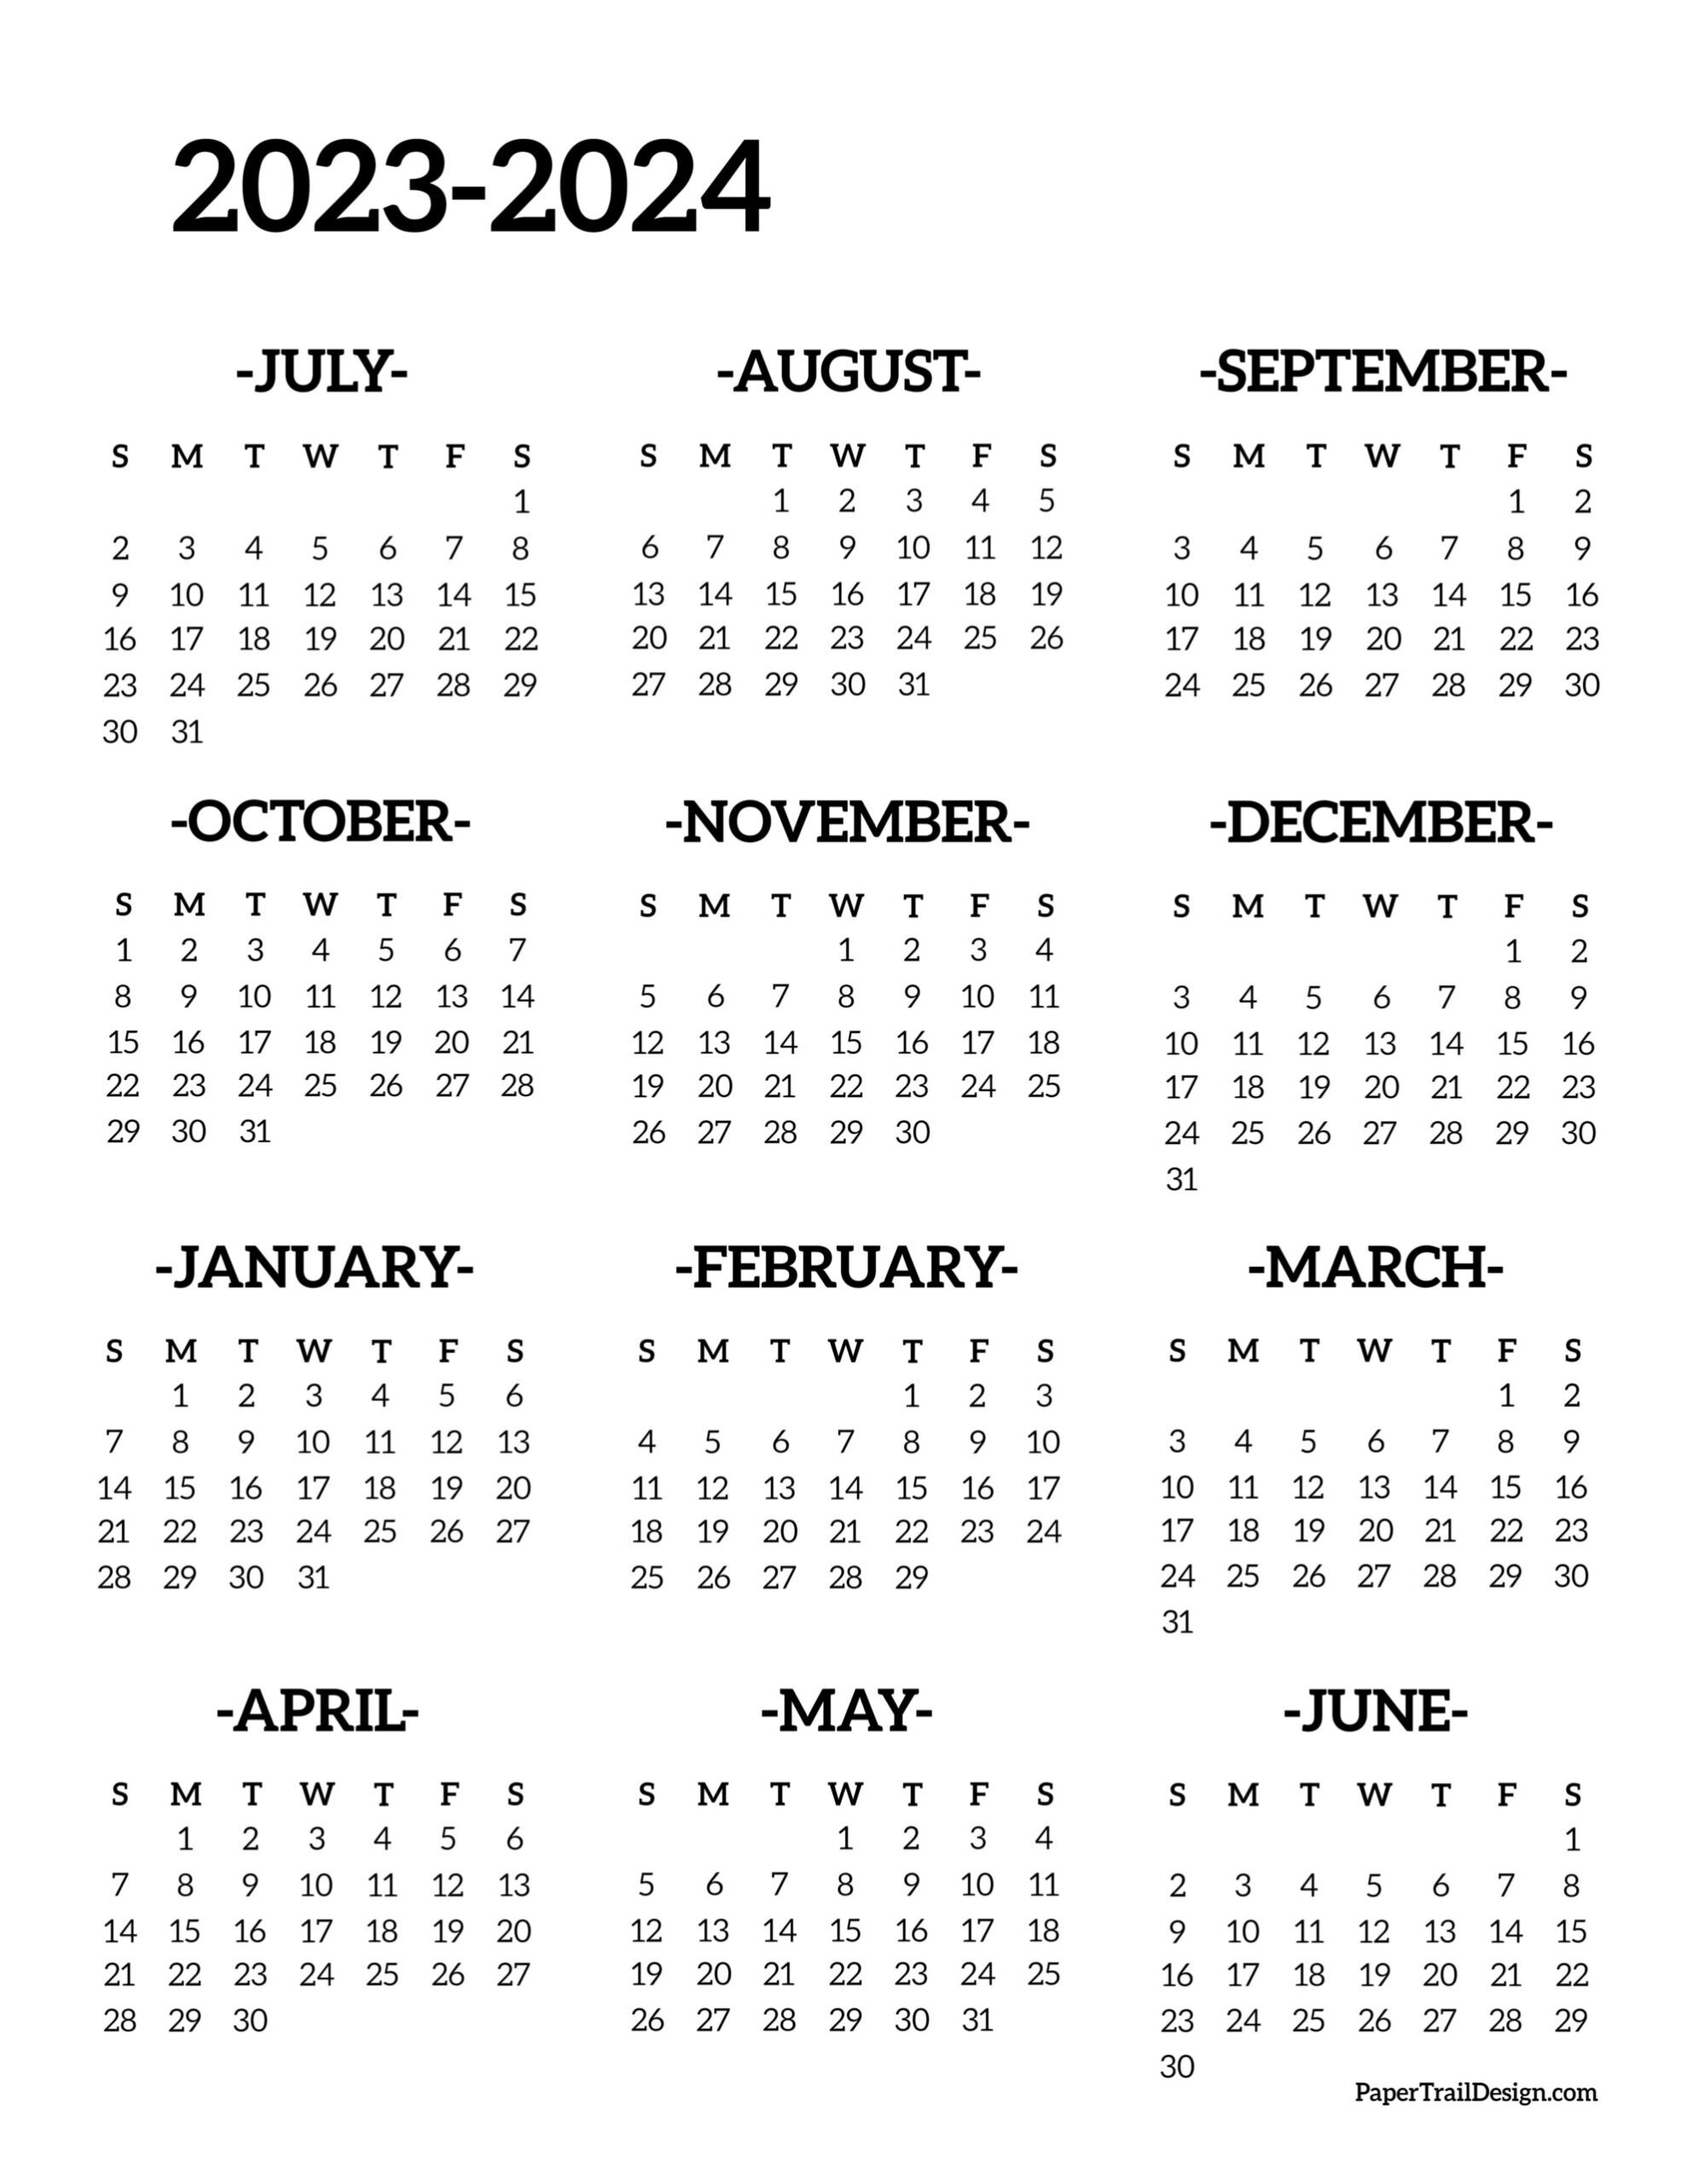 2023-2024 School Year Calendar Free Printable - Paper Trail Design | Printable Calendar 2023 And 2024 Free